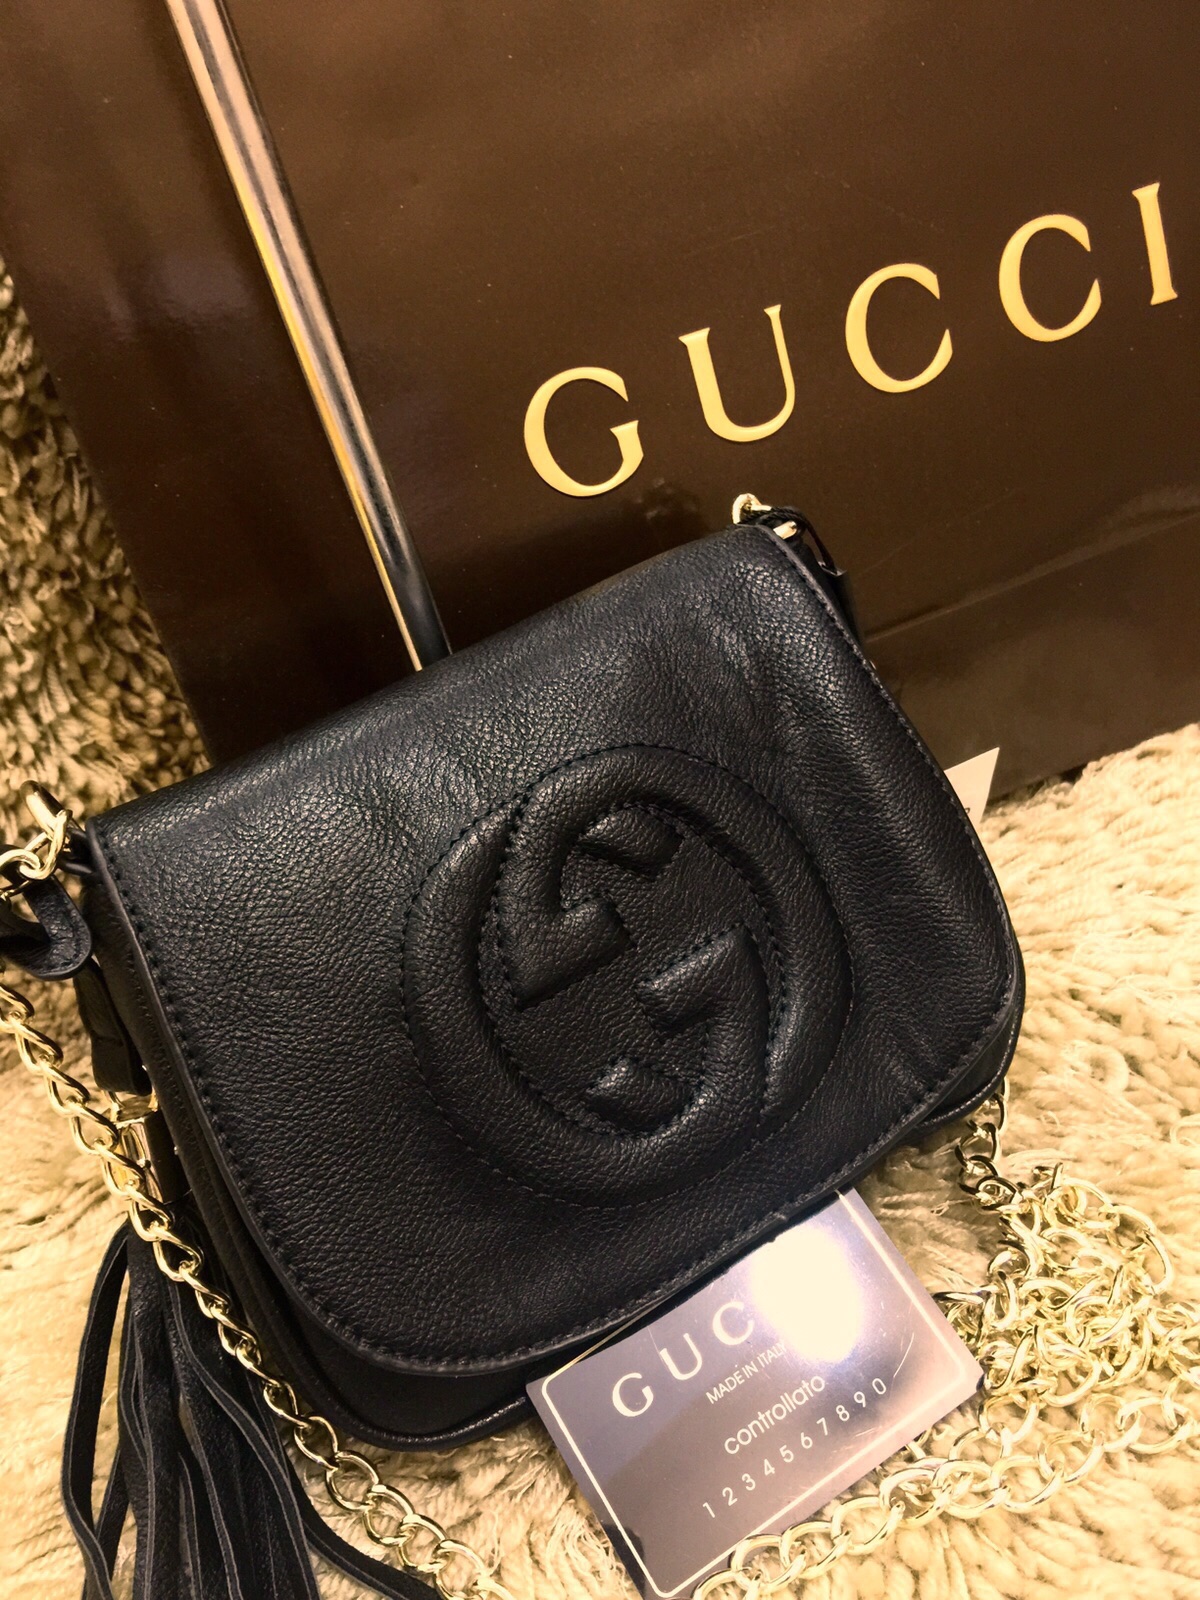 Gucci Money Clip Wallet - Online India - Shop Now At Dilli Bazar